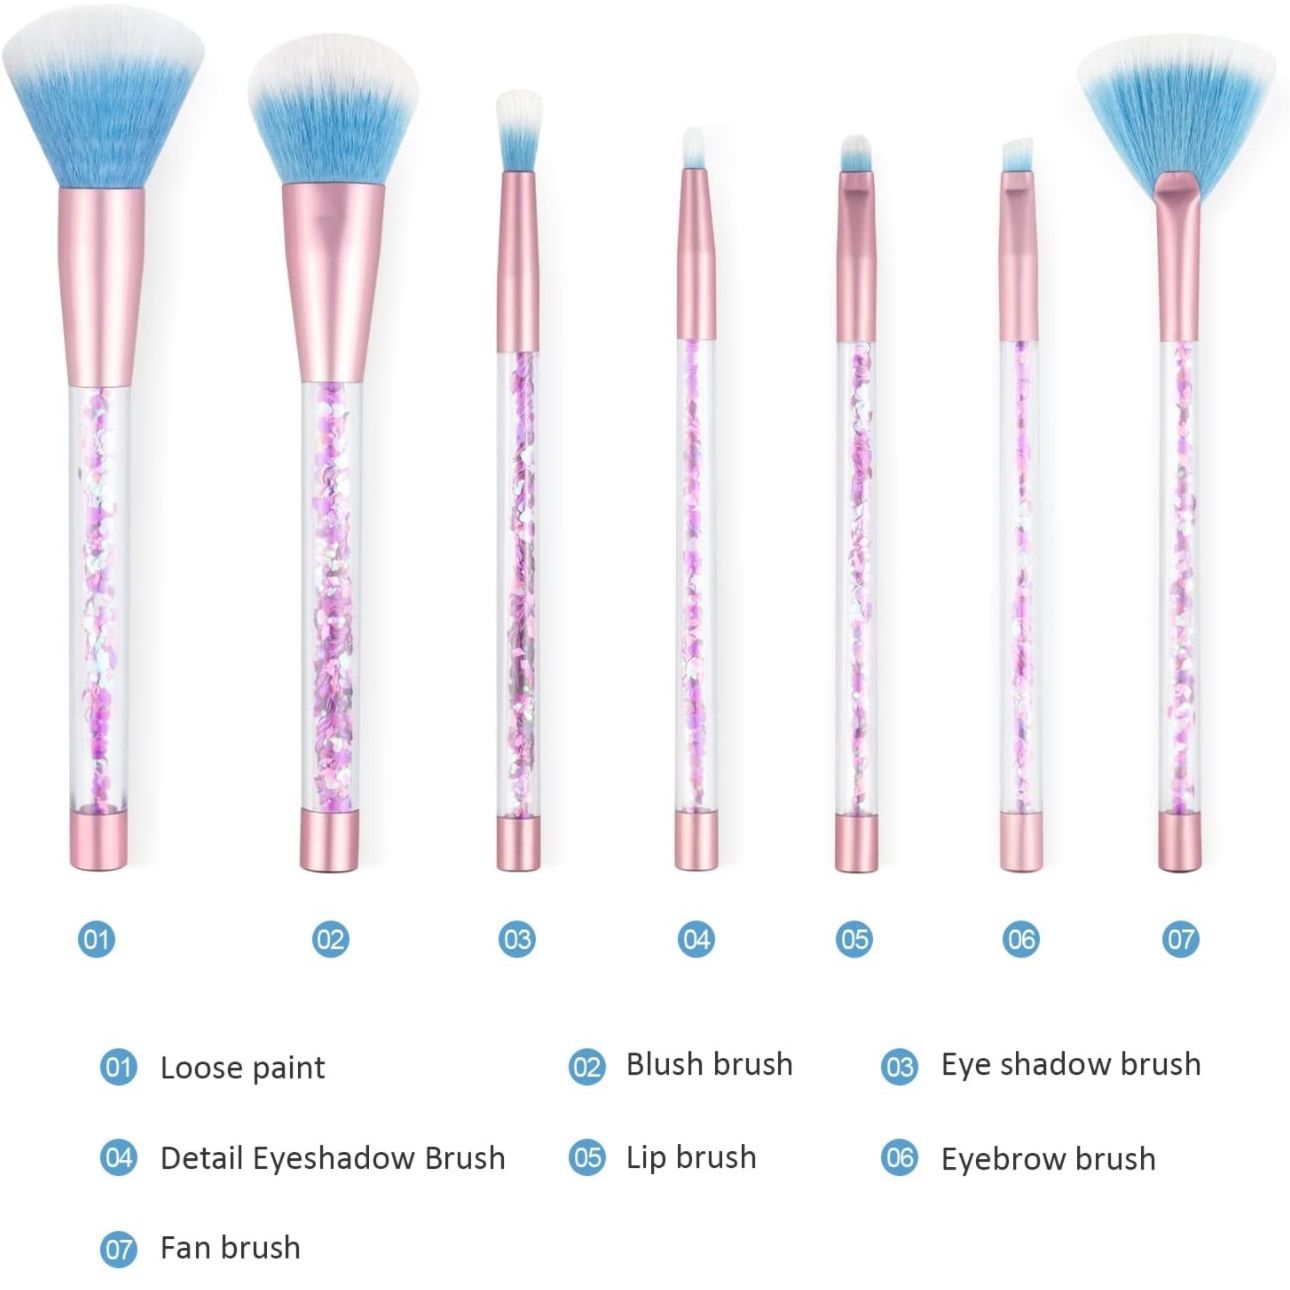 Makeup Brushes, 7PCS Glitter Quicksand Handle Makeup Brush Set for Foundation Powder Blush Eyeshadow with Case Beautiful Pink Purple Cosmetic Brushes